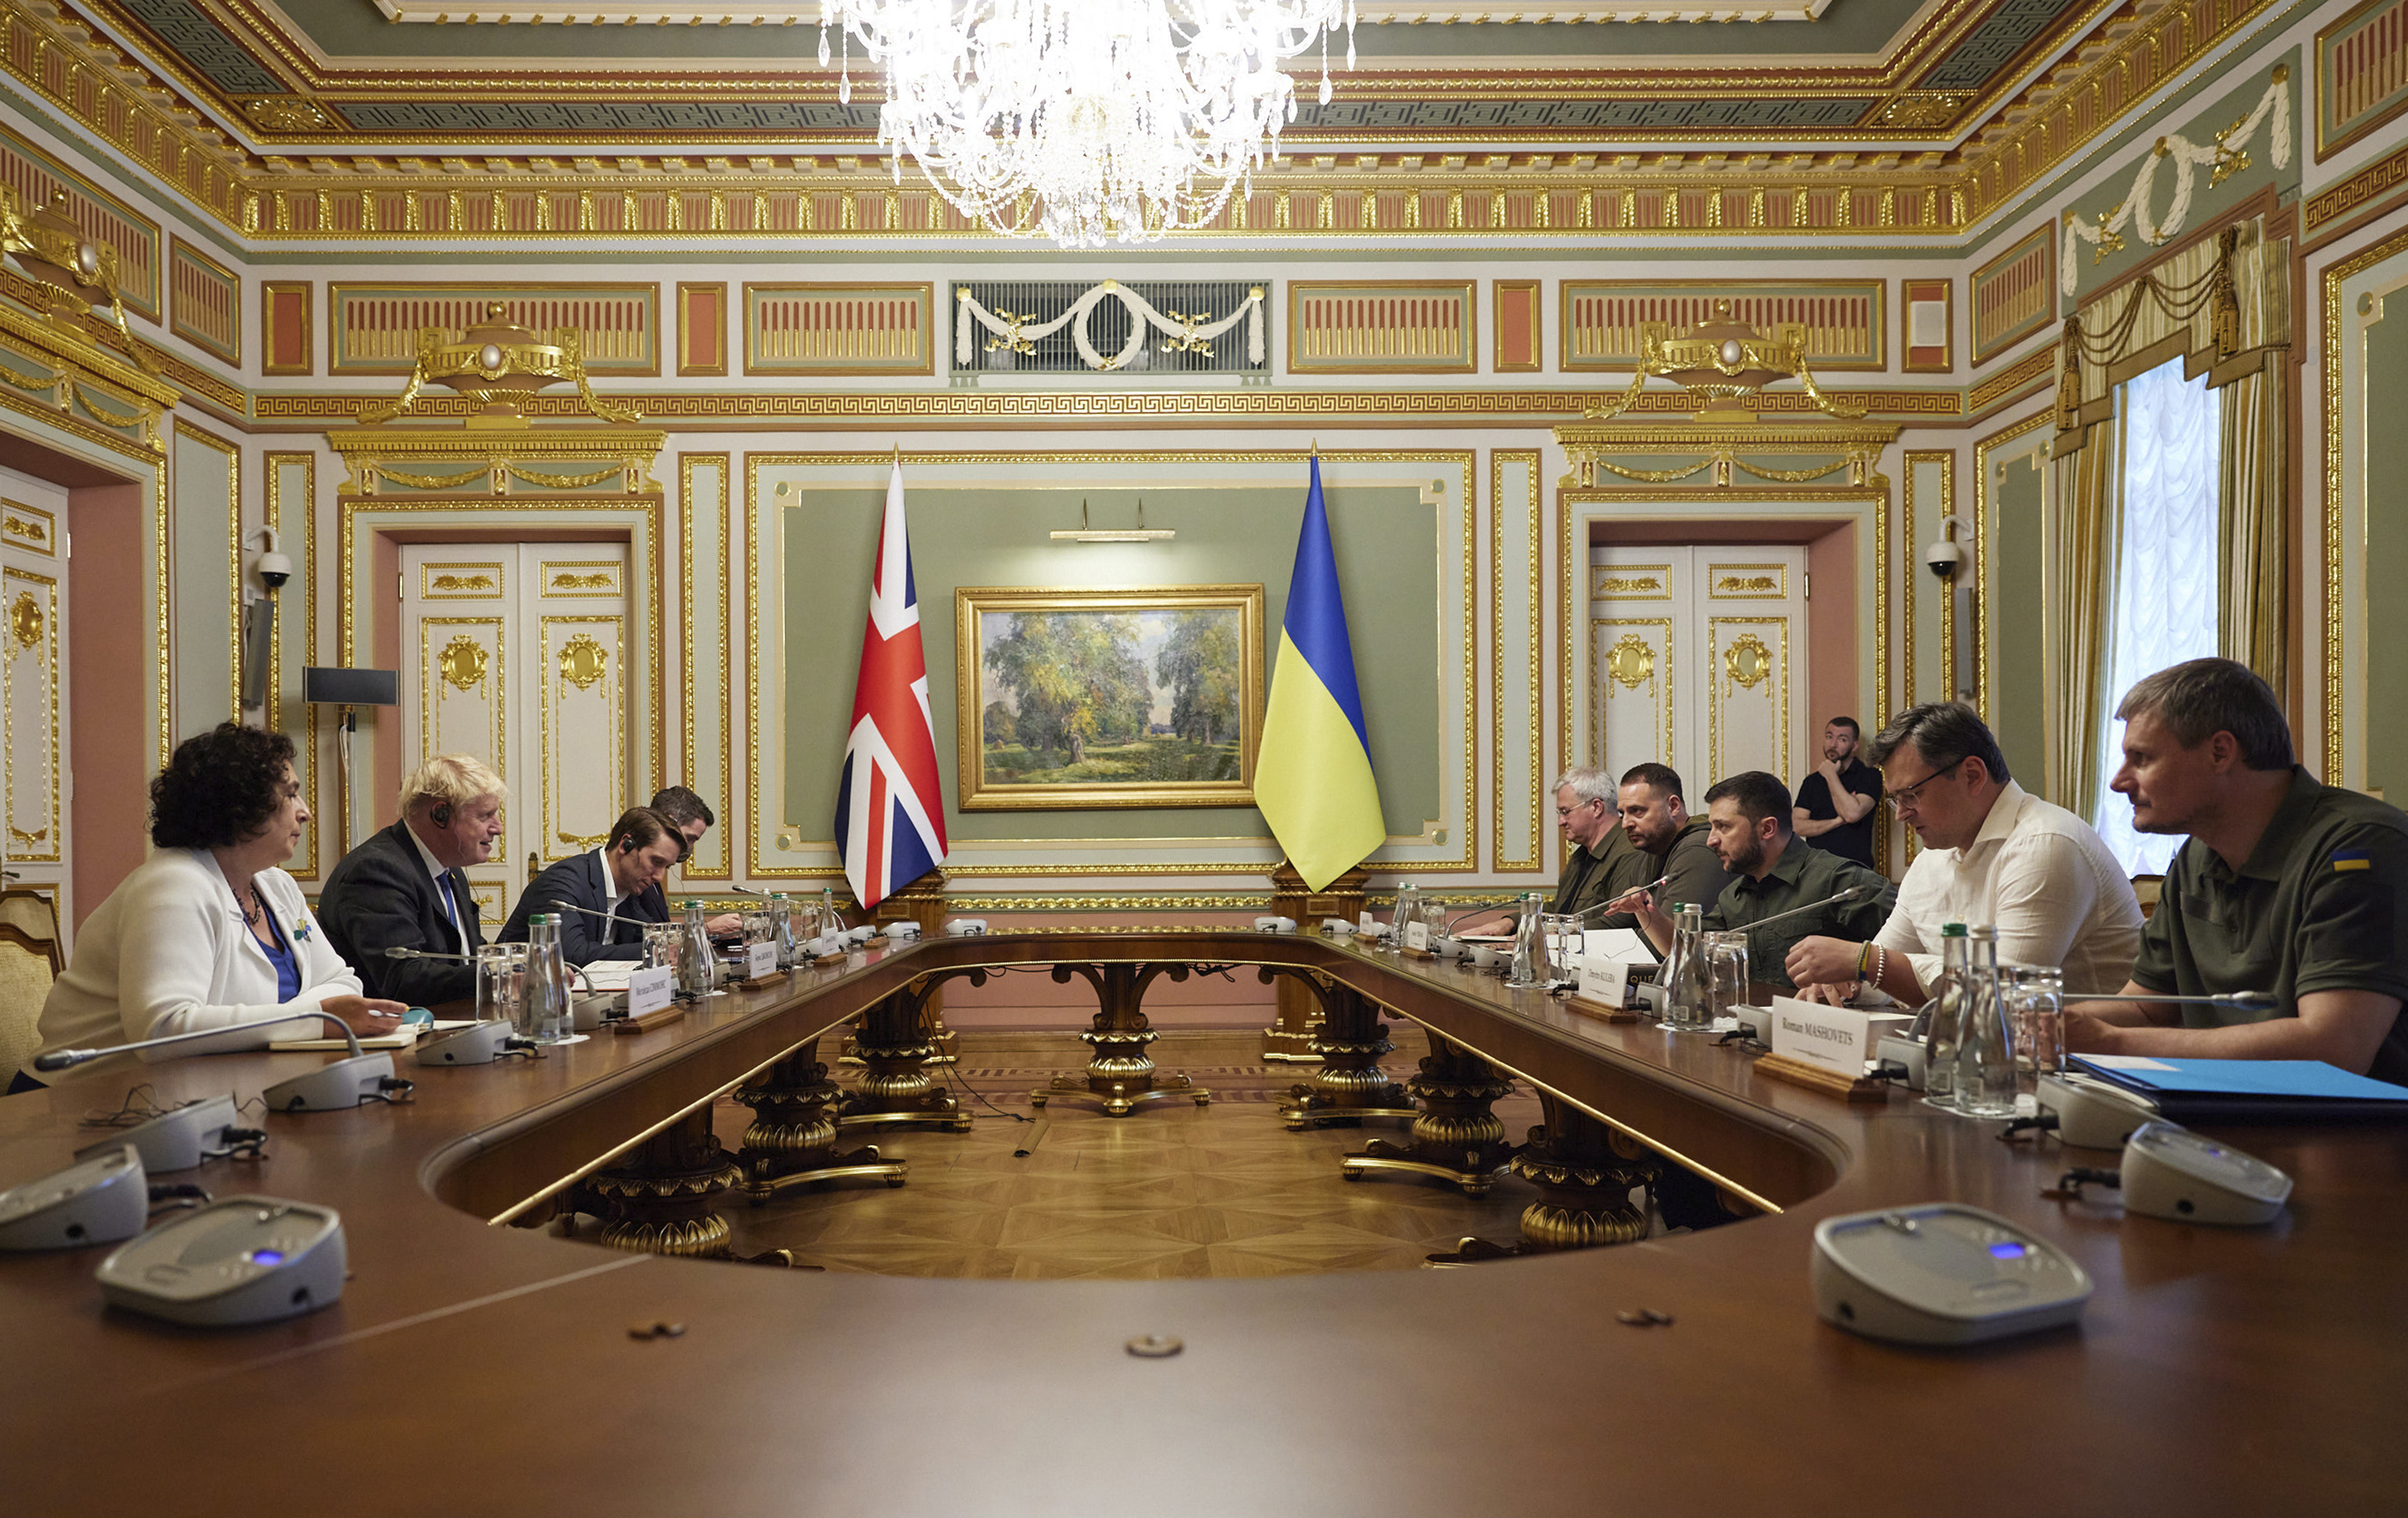 British Prime Minister Boris Johnson meets with Ukrainian President Volodymyr Zelensky in Kyiv, Ukraine on Friday.